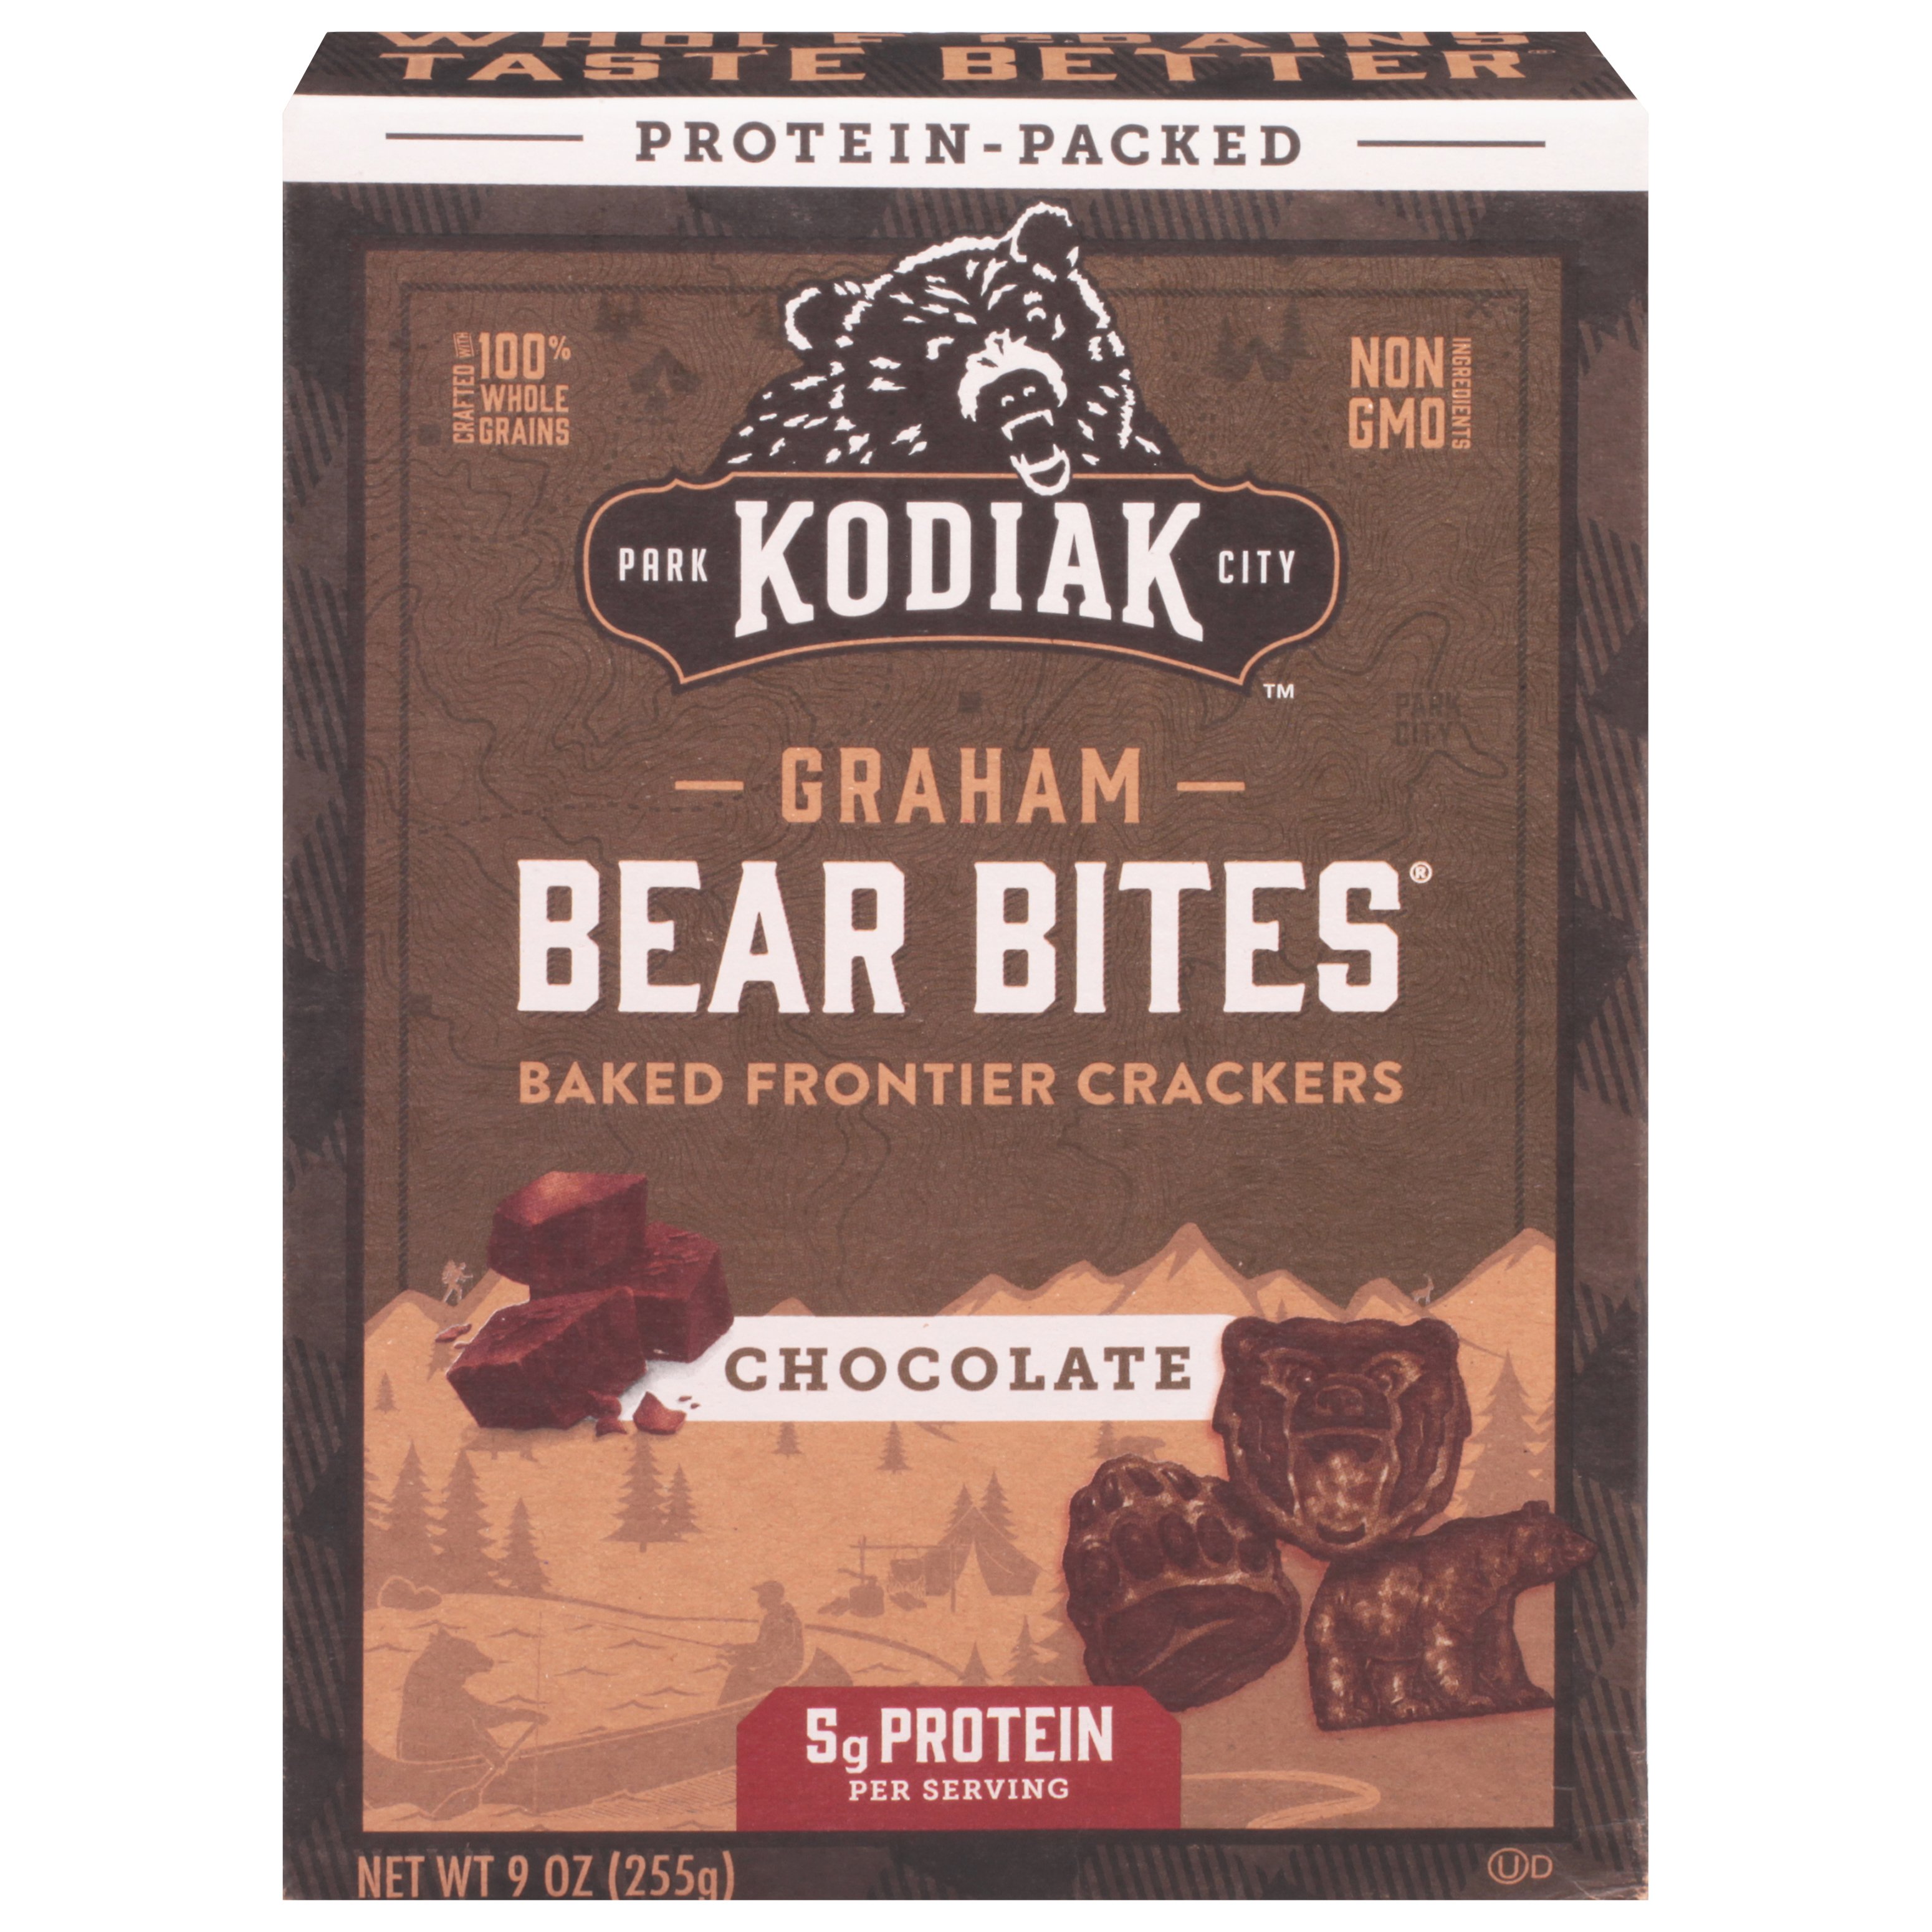 Kodiak Bear Bites 5g Protein Graham Crackers - Chocolate